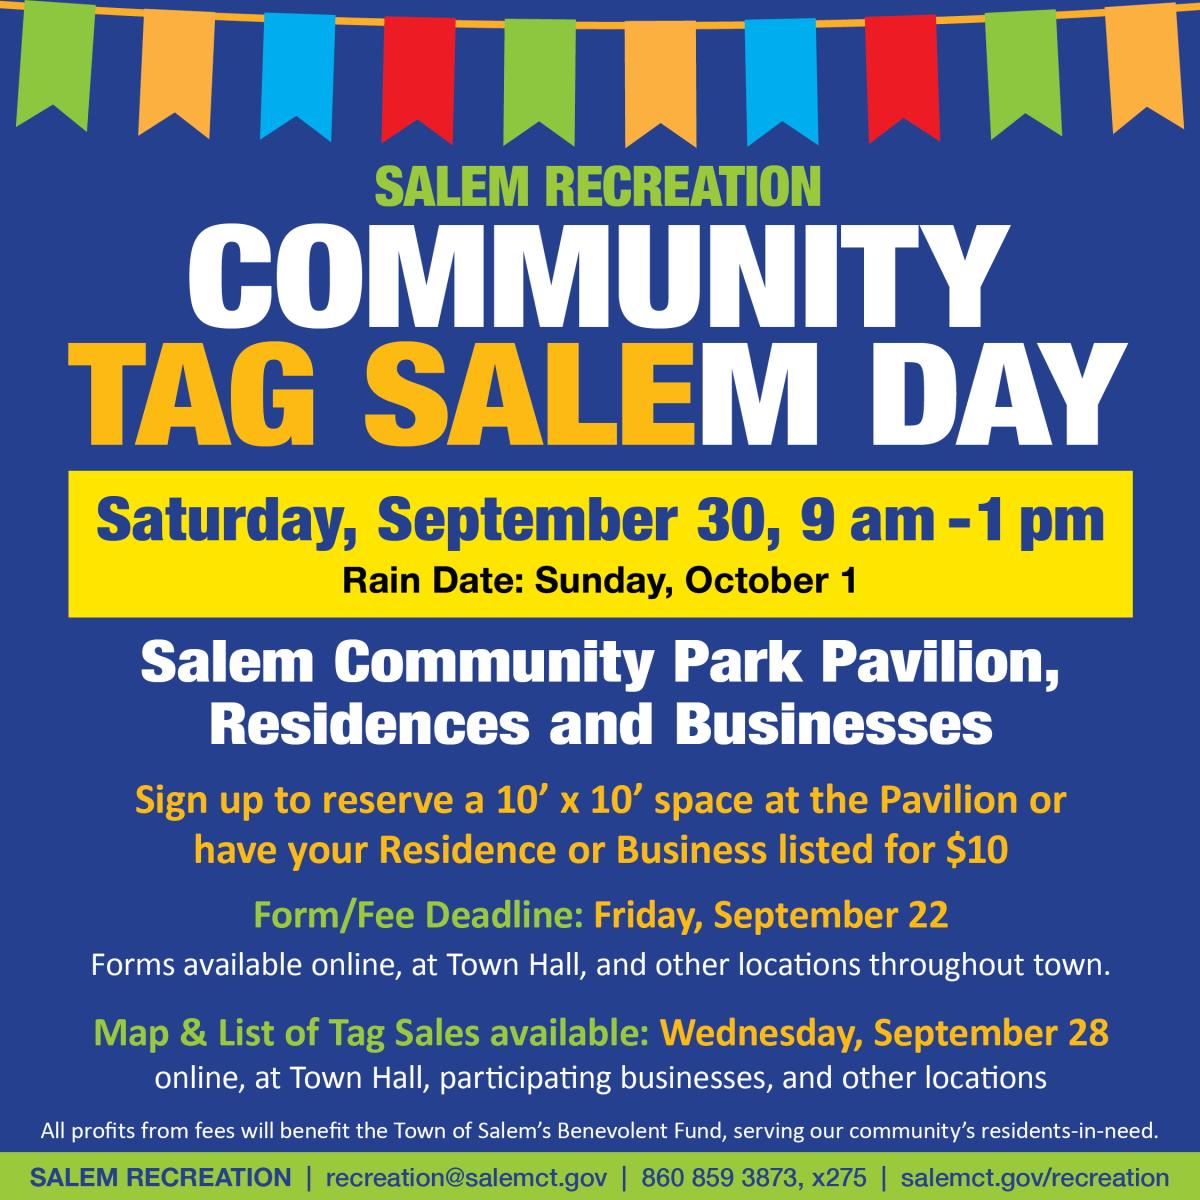 Community Tag Sale, September 30